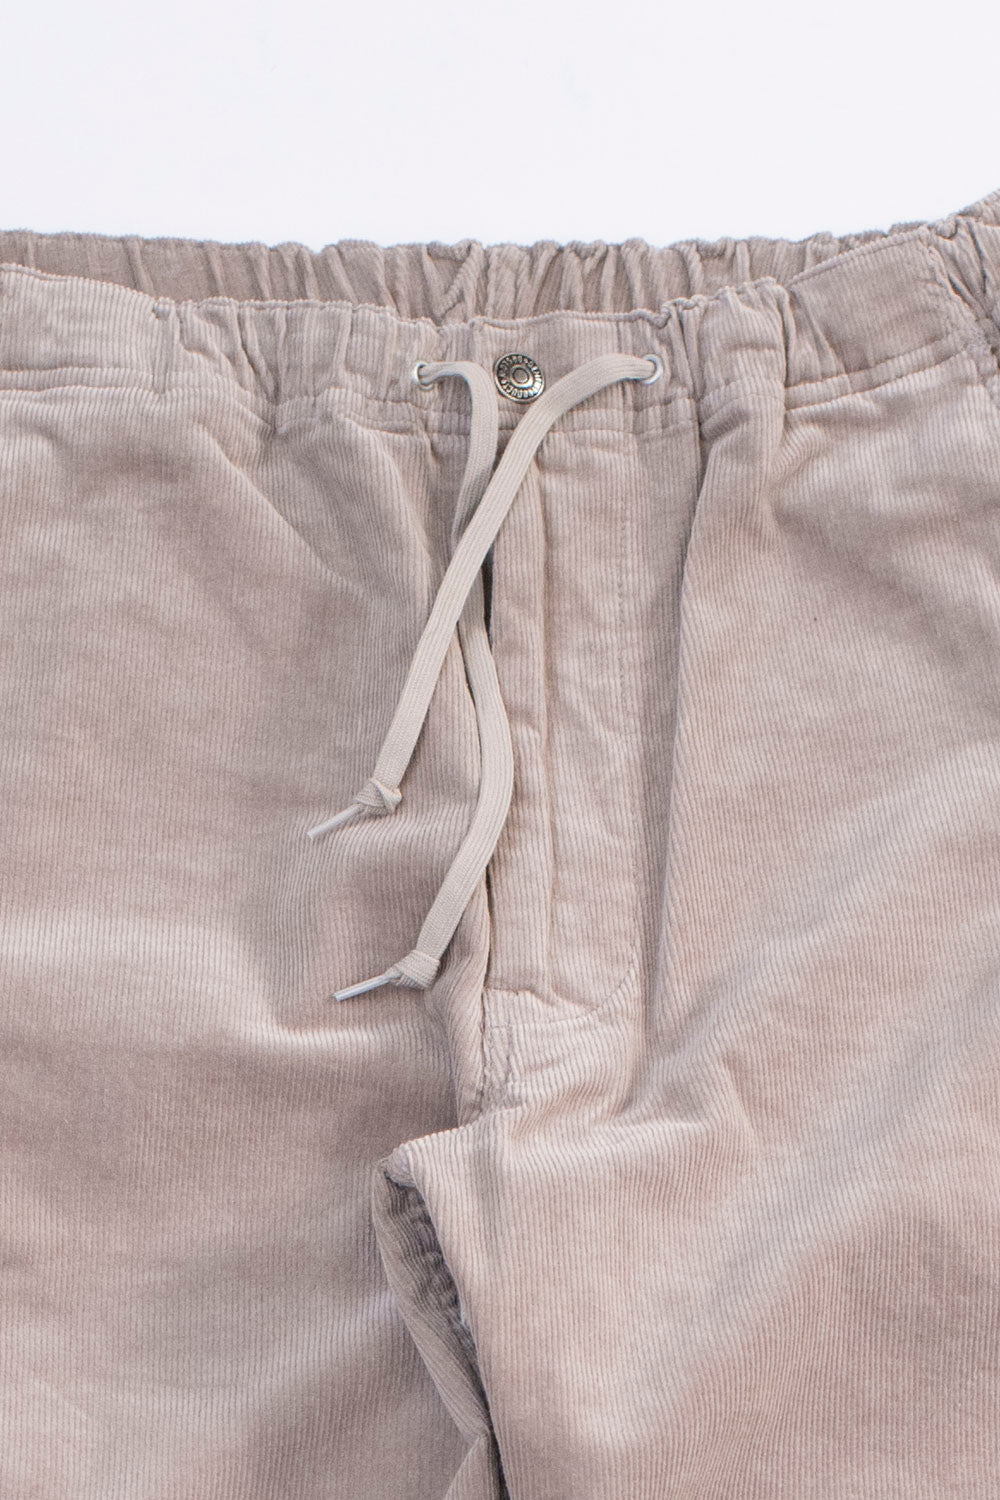 03-1002-C71 - New Yorker Pant Stretch Corduroy - Light Gray